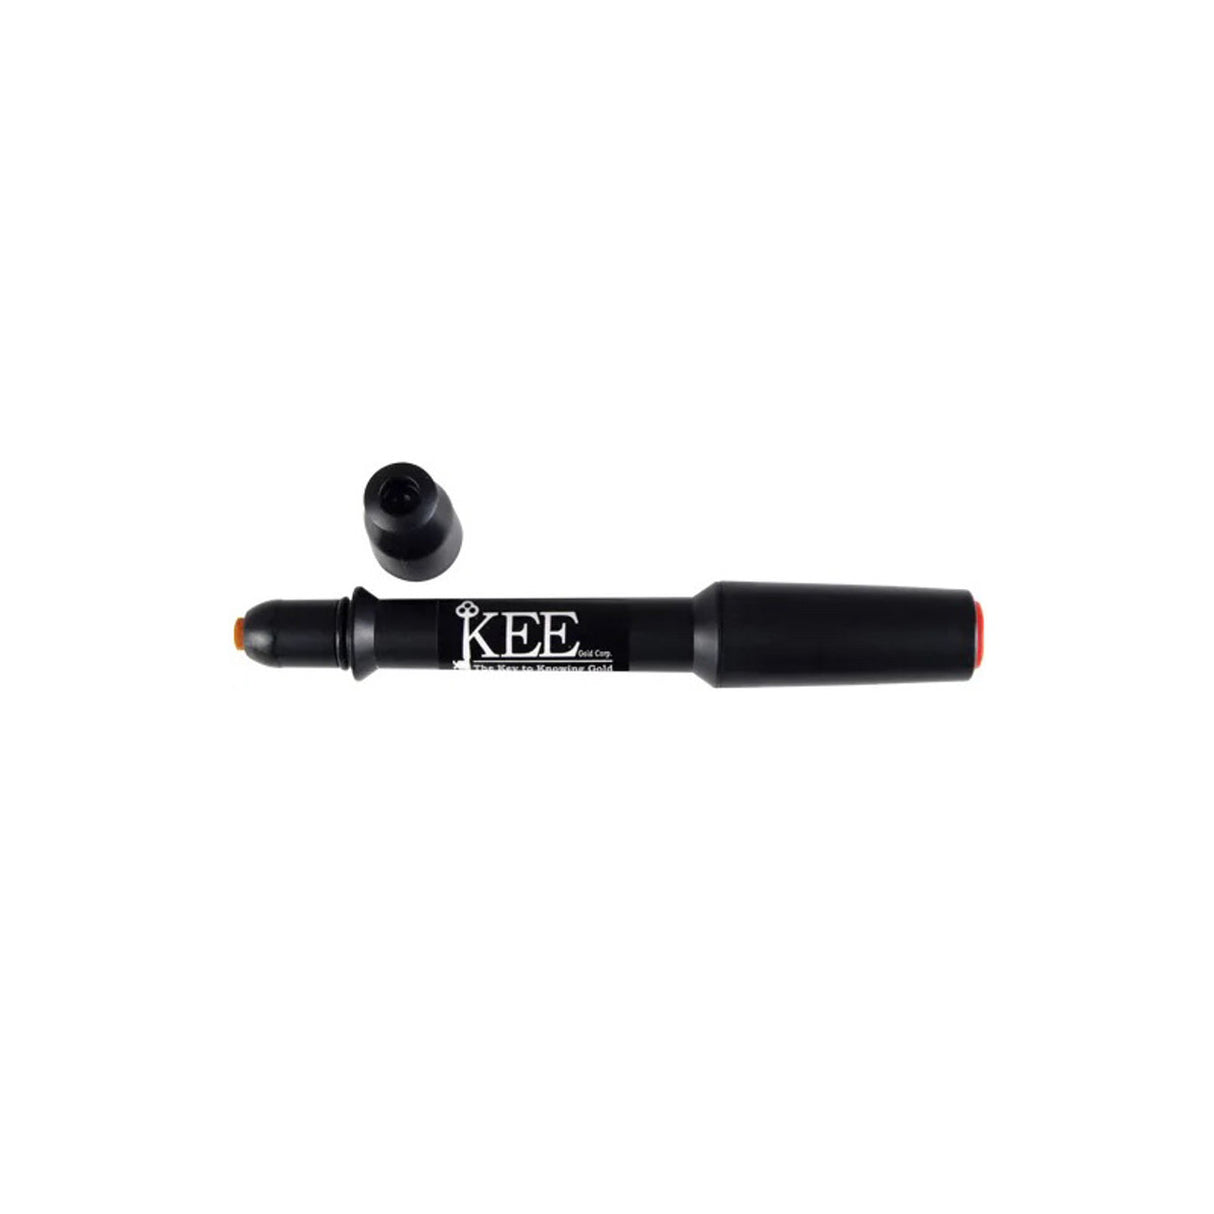 KEE Gold & Platinum Tester Replacement Pen